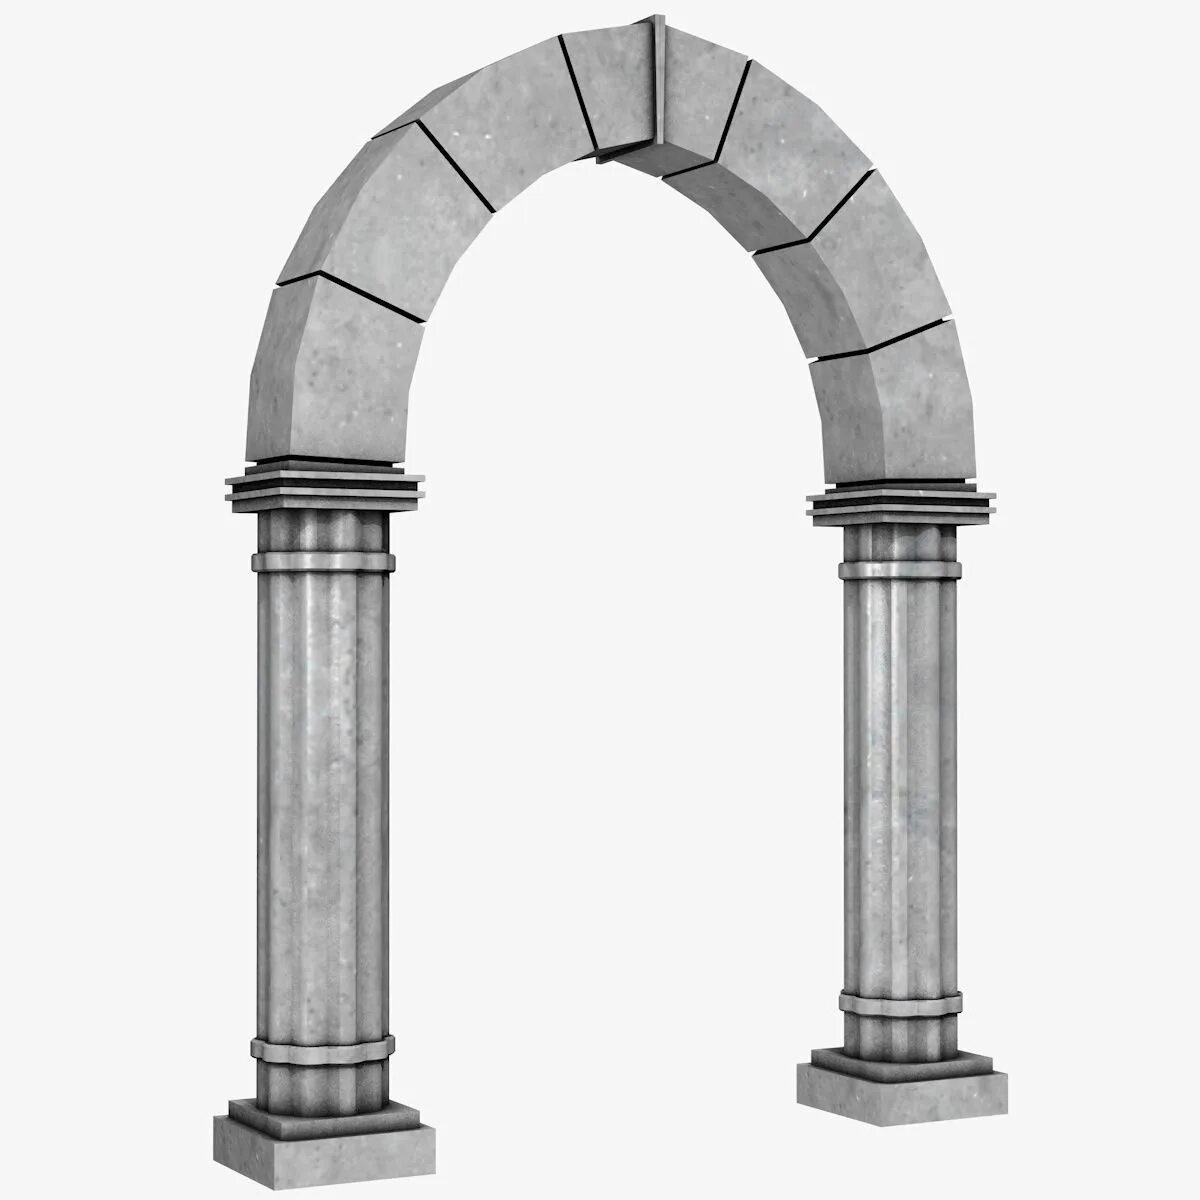 3д арка. Archway сщштдшые. Каменная арка. Арка с колоннами. Каменная арка на белом фоне.